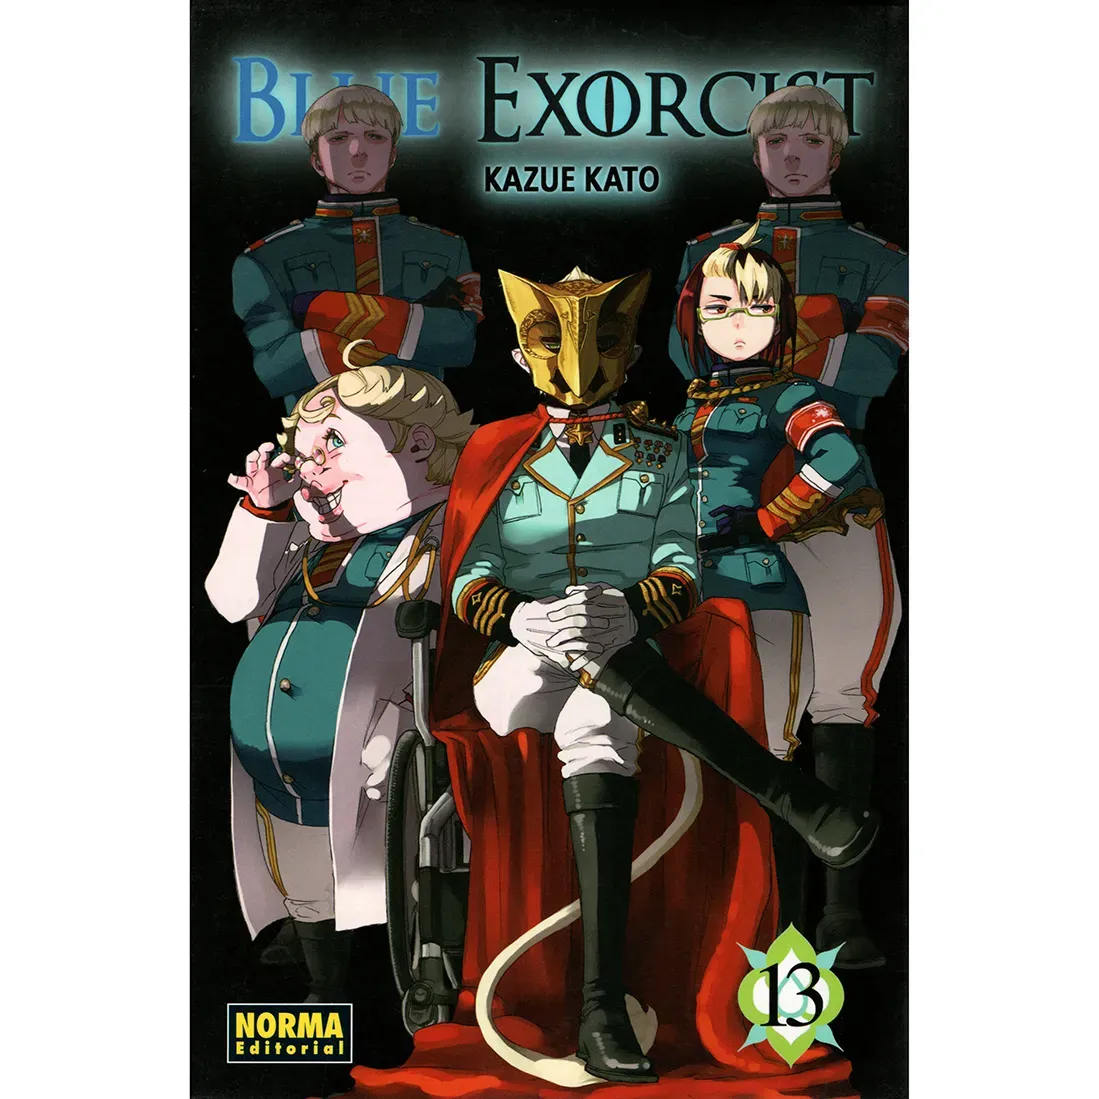 Blue Exorcist No. 13